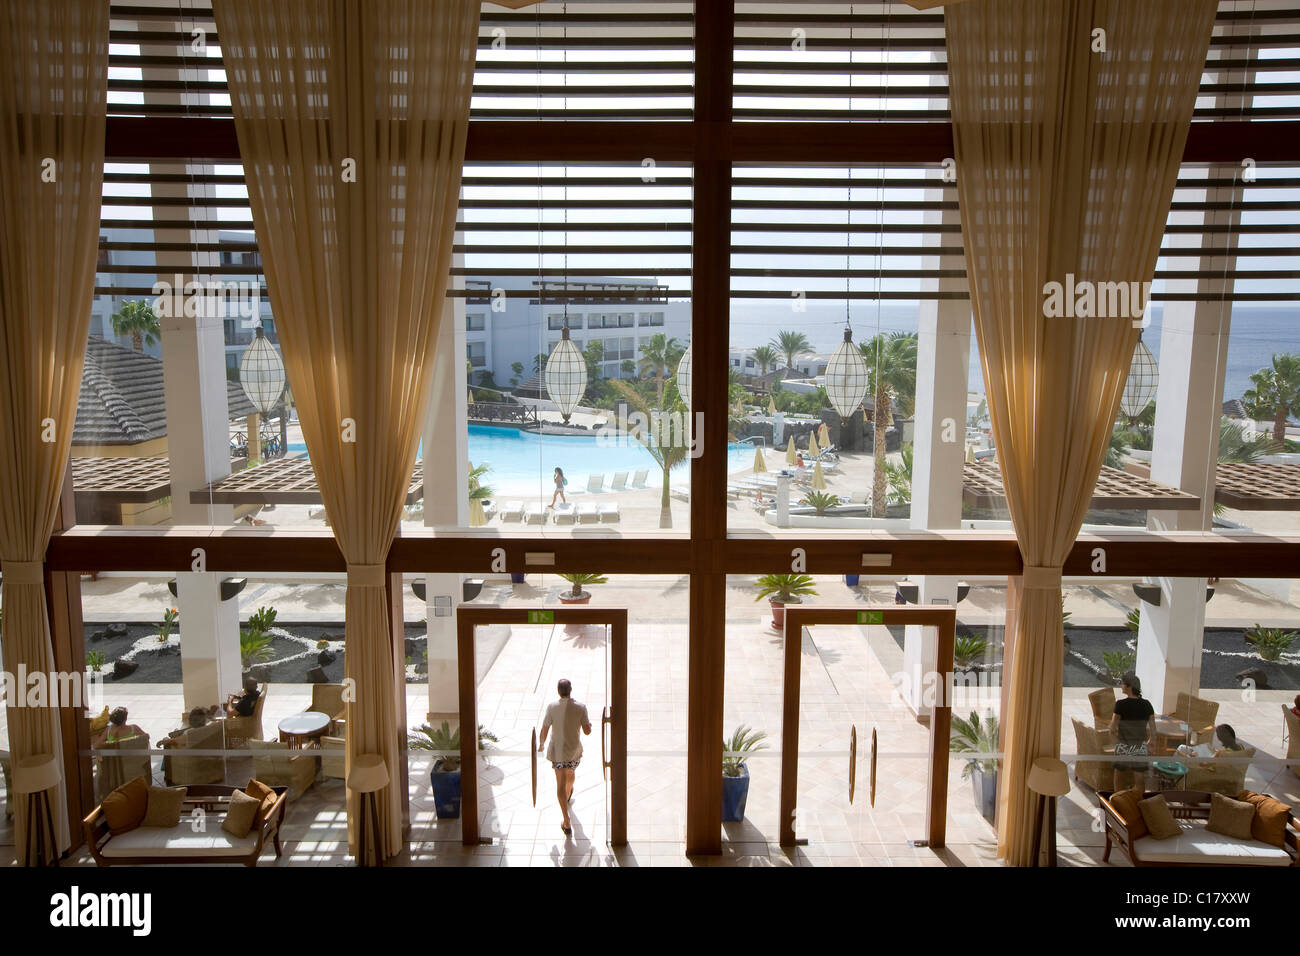 Lobby, hall, exit to the swimming pool, Hotel Hesperia Lanzarote, Costa Calero, Lanzarote, Canary Islands, Spain, Europe Stock Photo